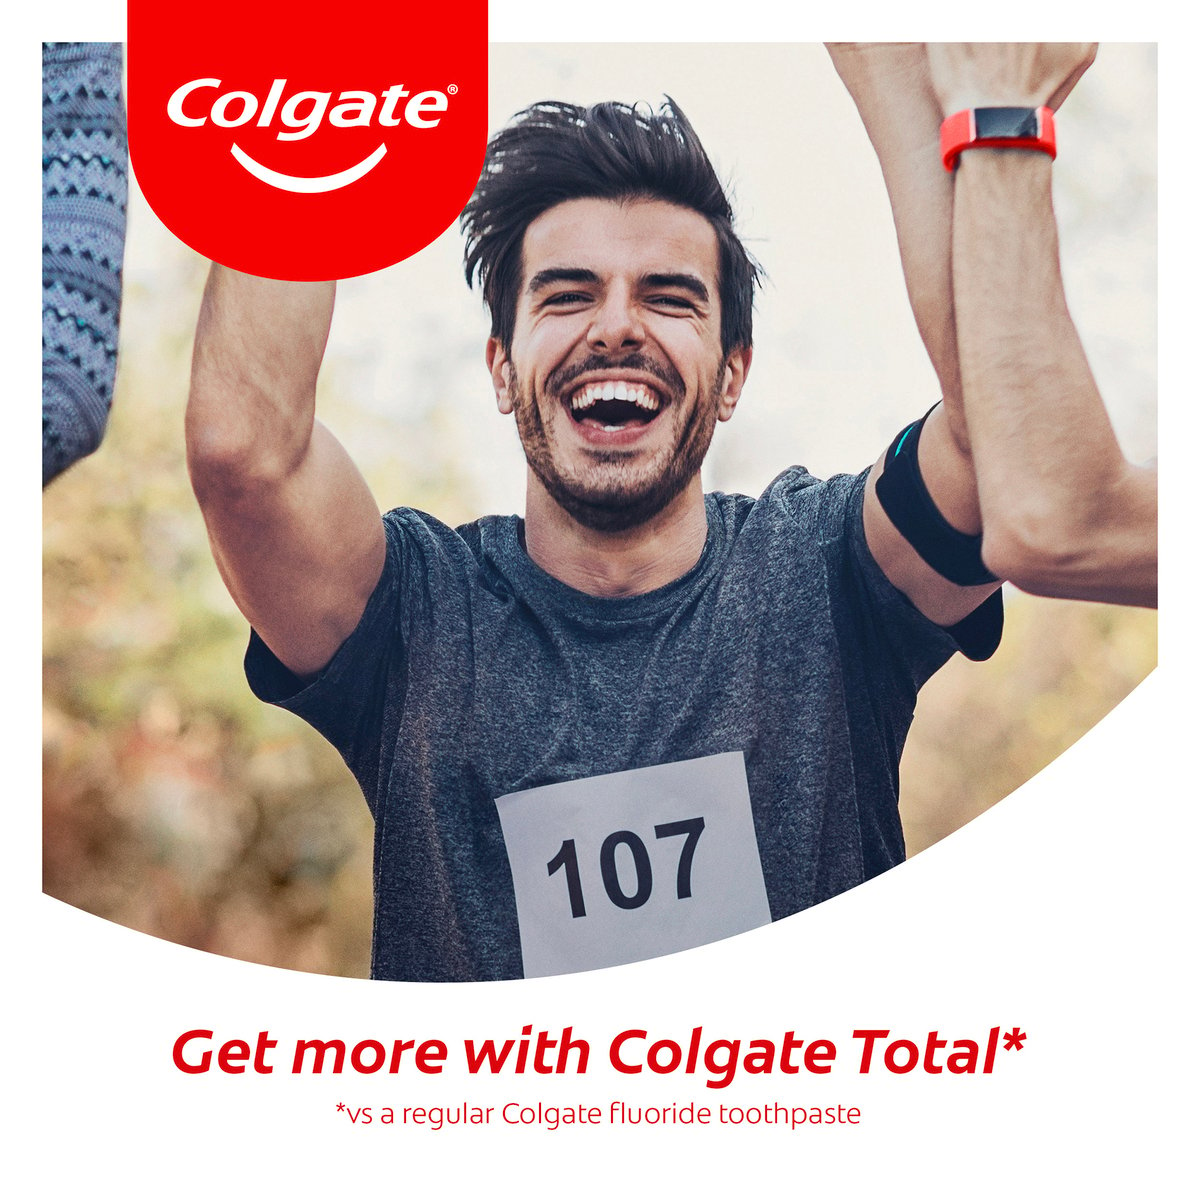 Colgate Fluoride Toothpaste Total Pro Whitening 75 ml